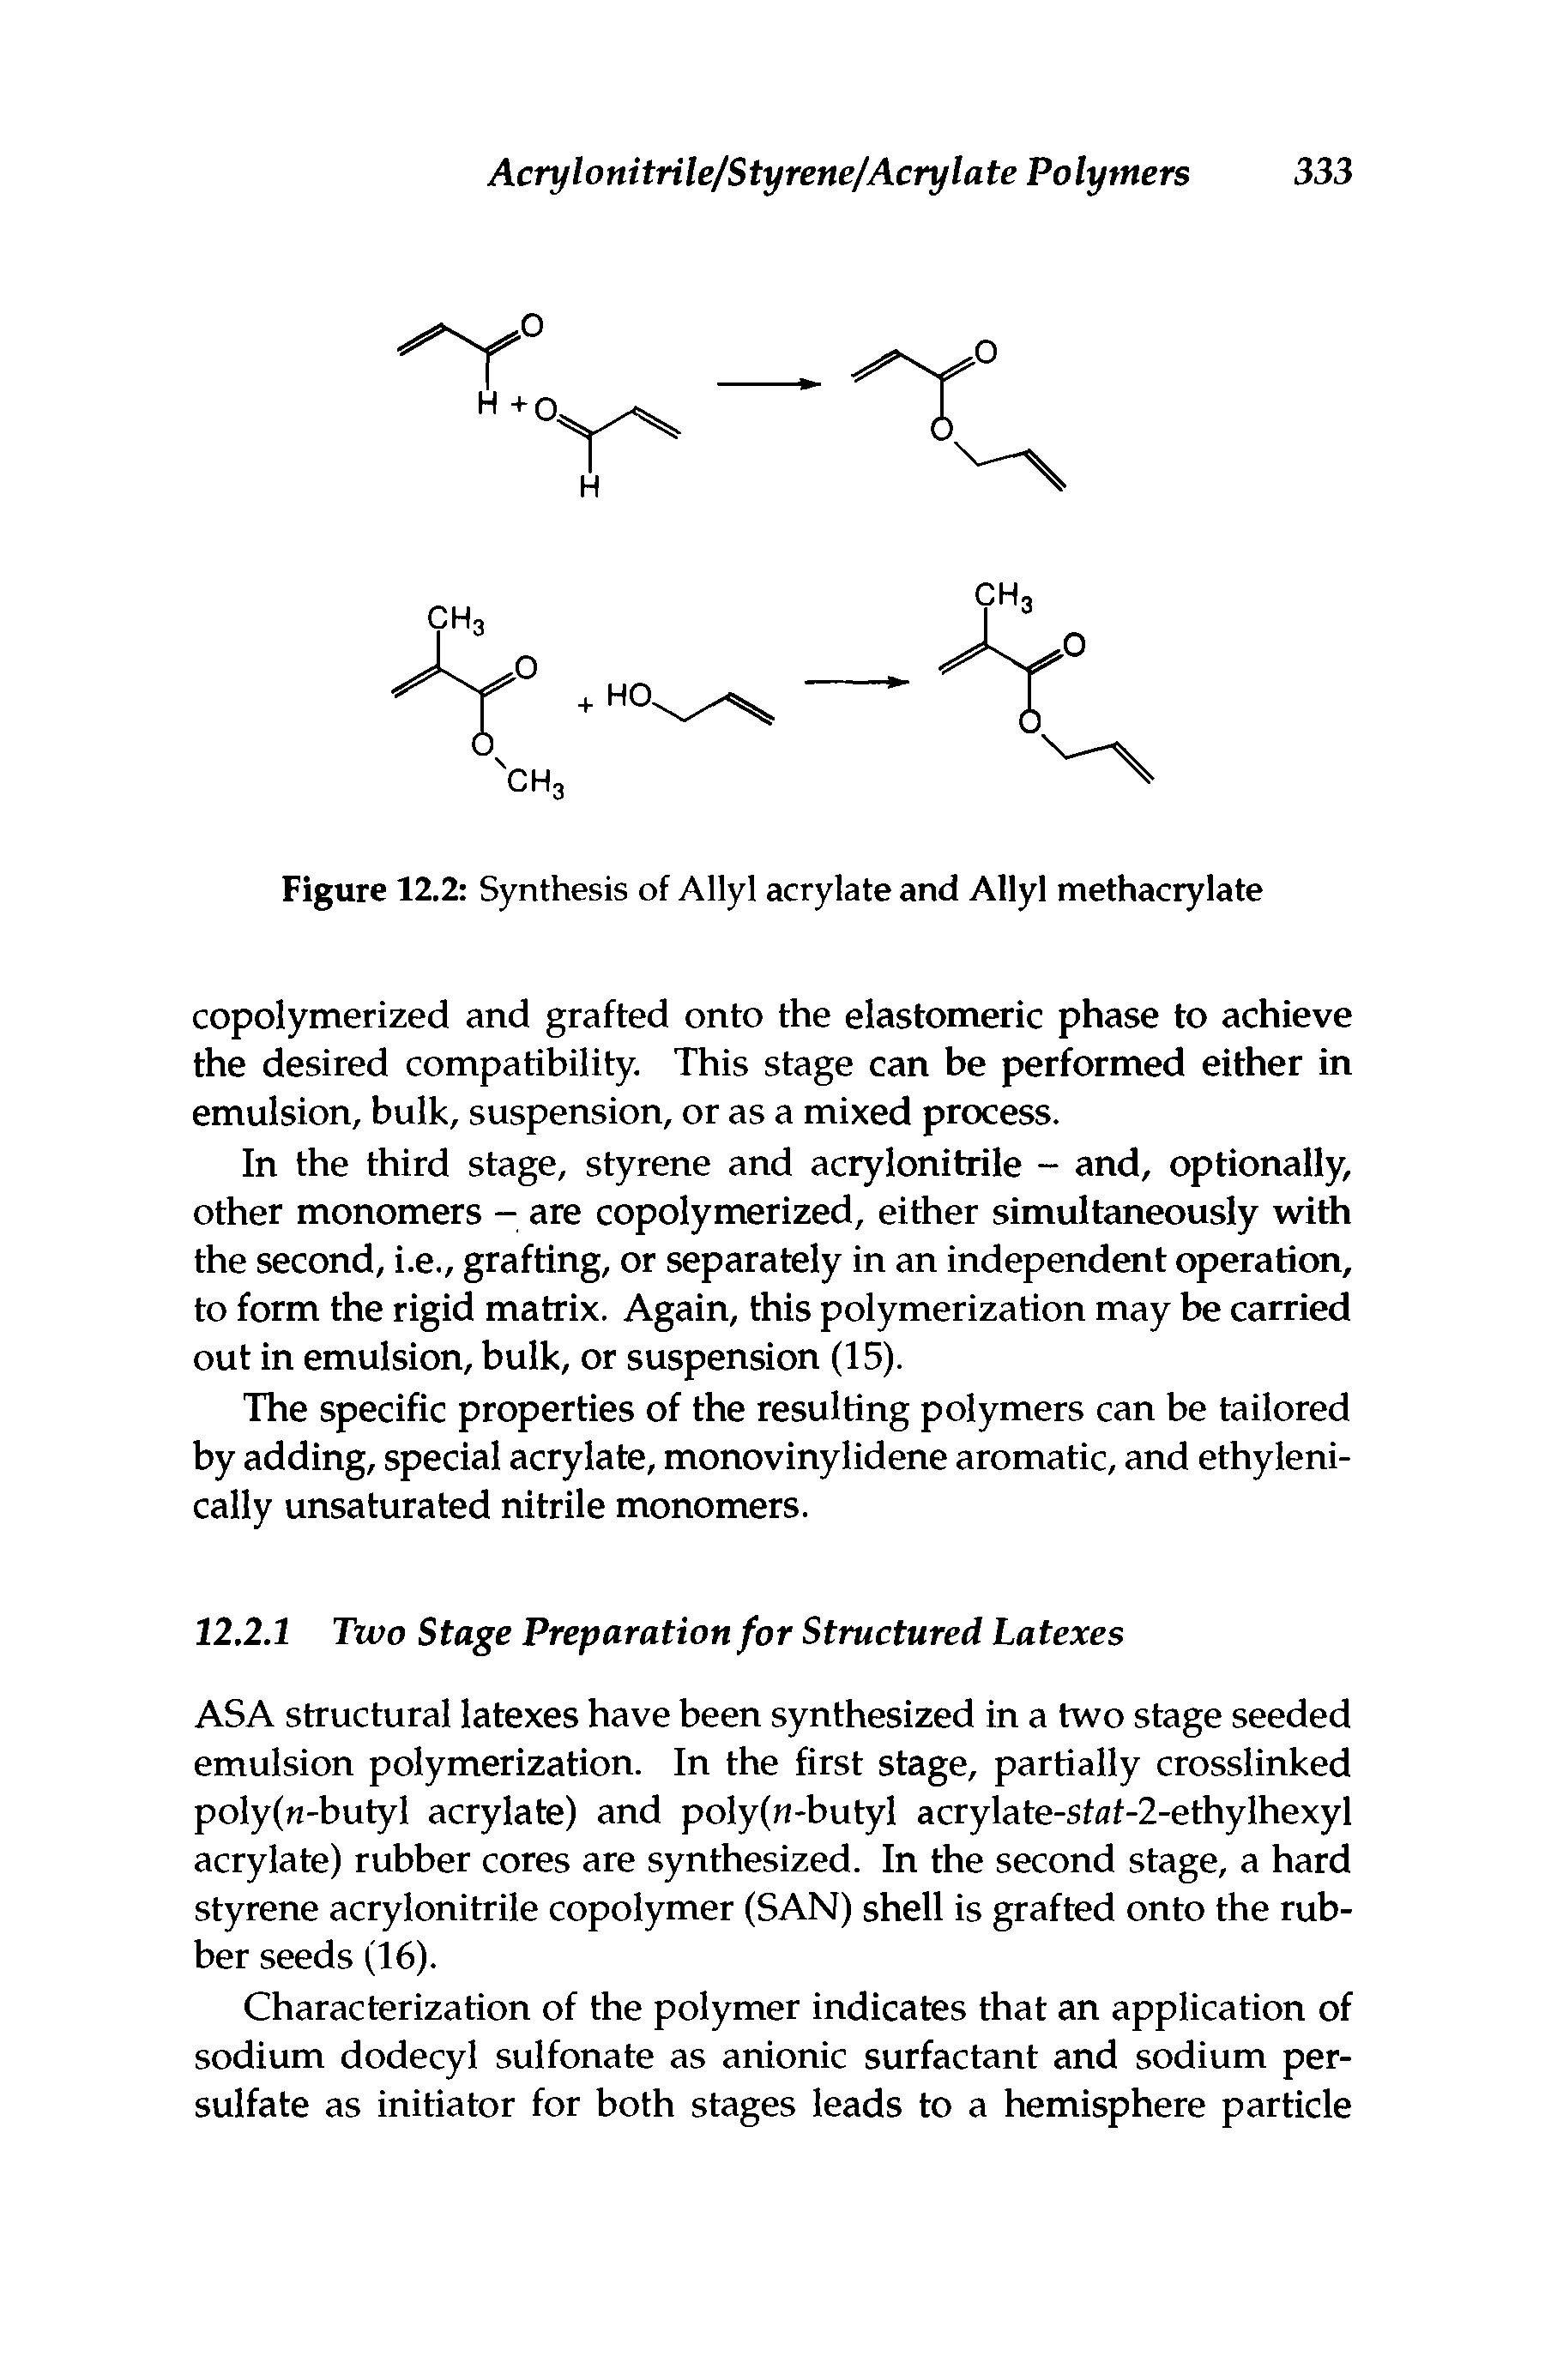 Figure 12.2 Synthesis of Allyl acrylate and Allyl methacrylate...